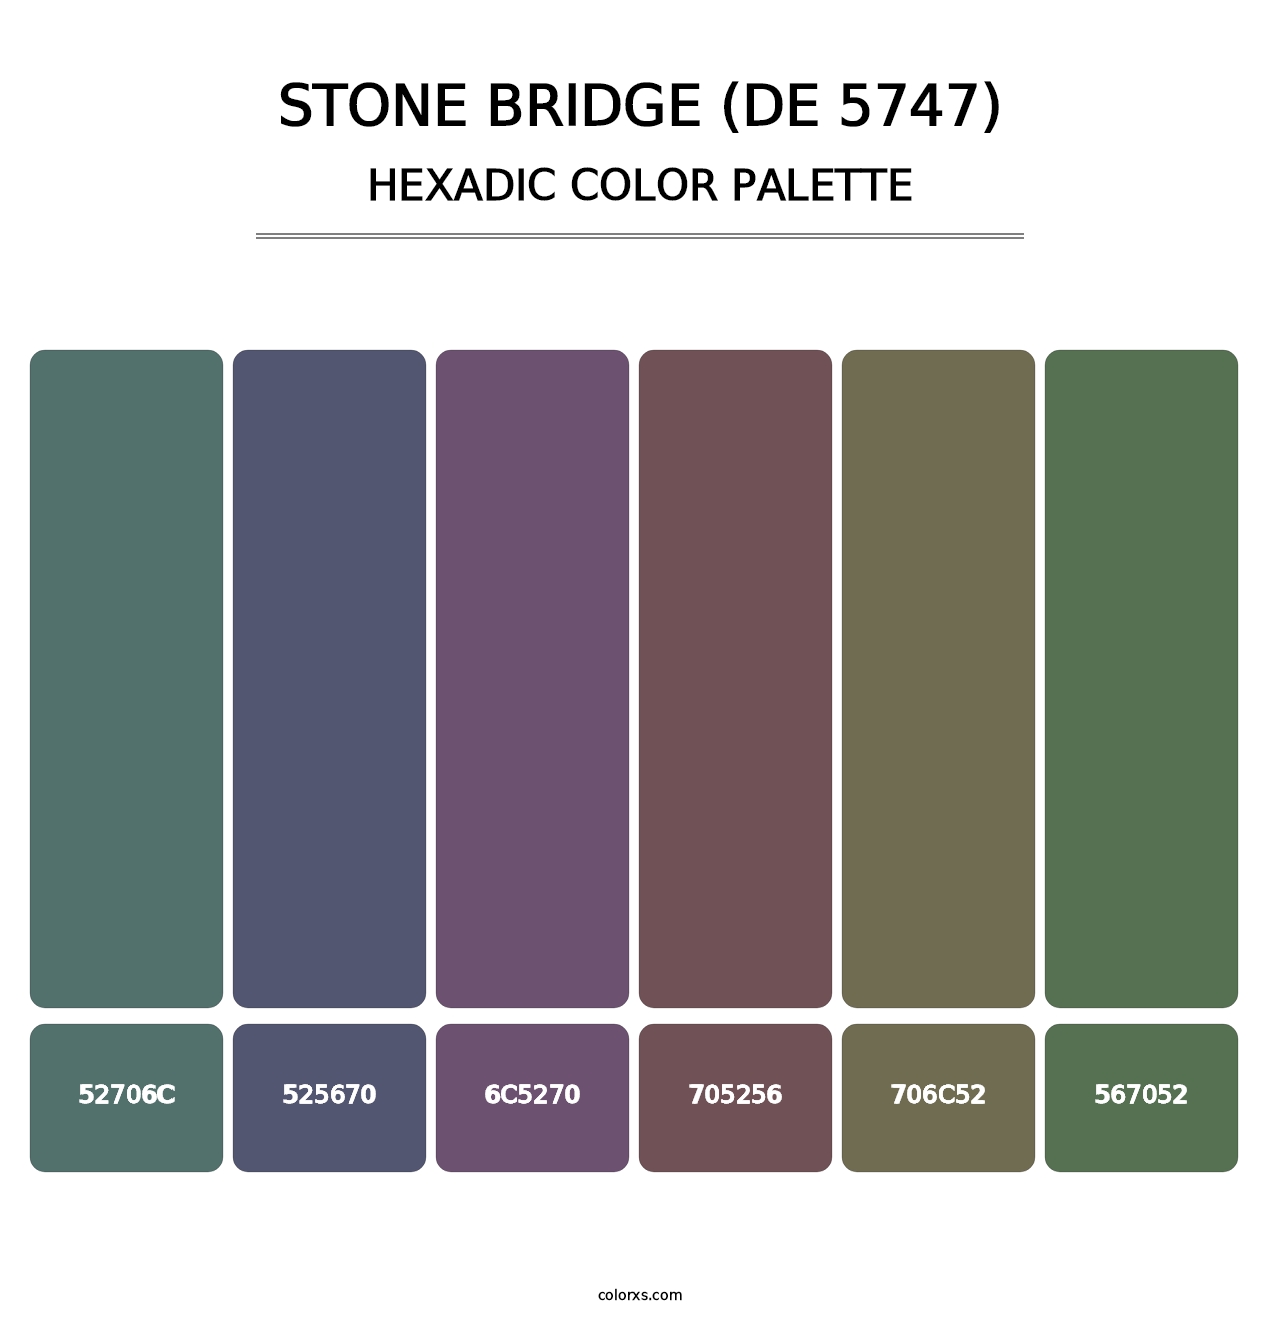 Stone Bridge (DE 5747) - Hexadic Color Palette